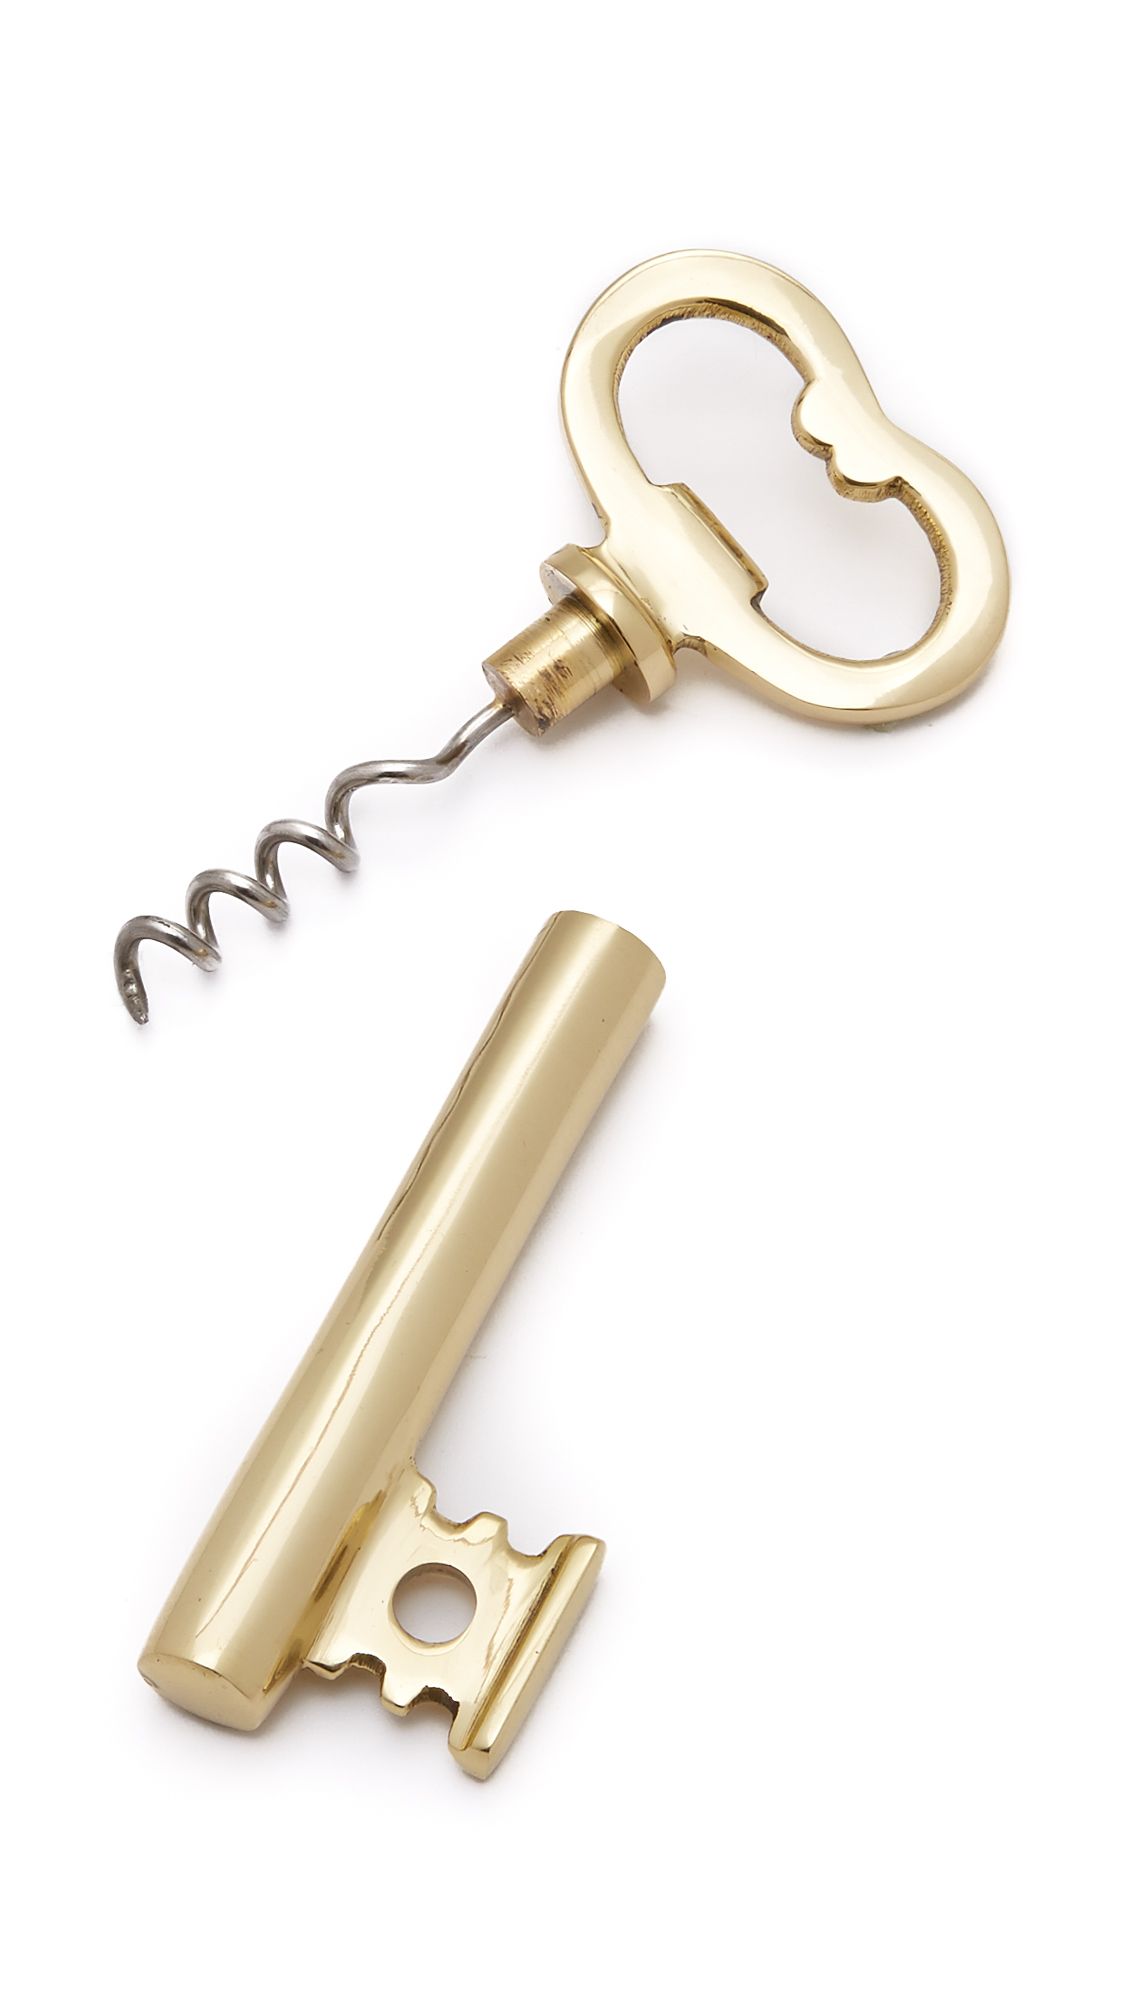 Golden Key Bottle Opener / Corkscrew | Shopbop